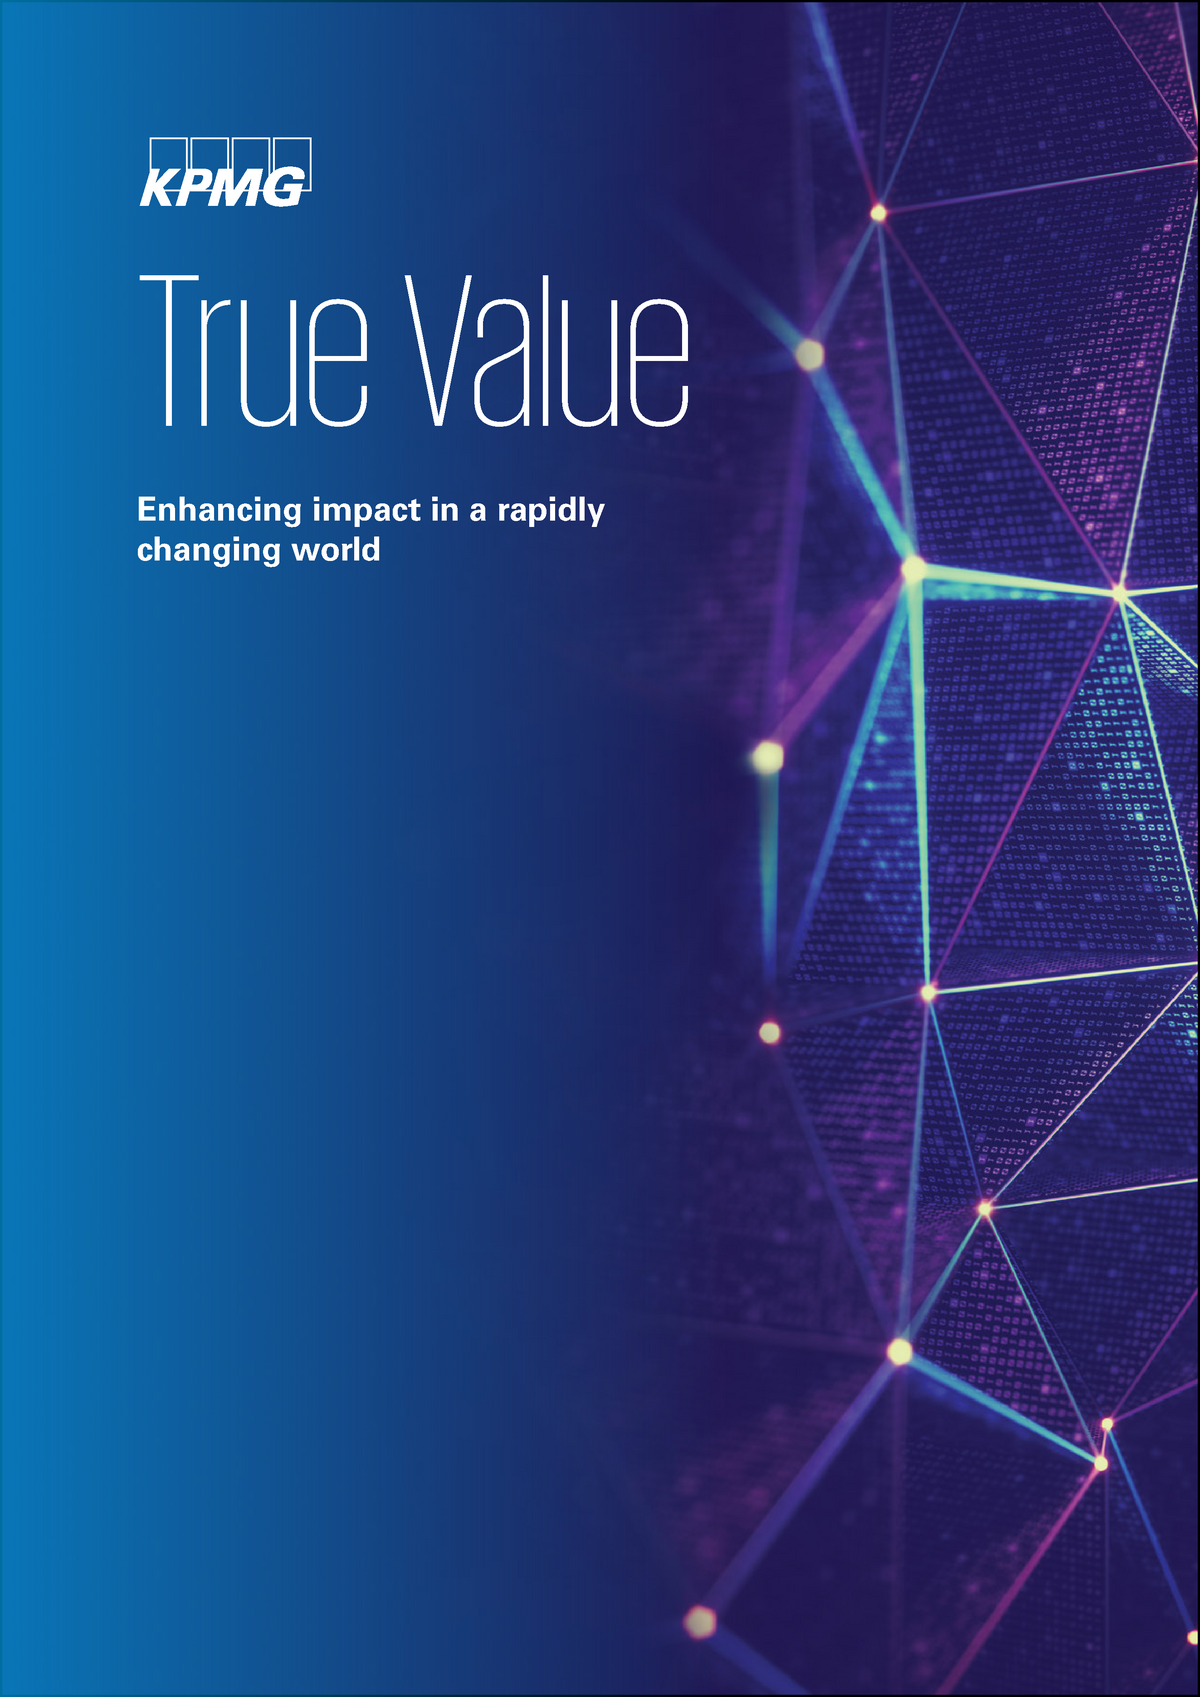 kpmg true value case study